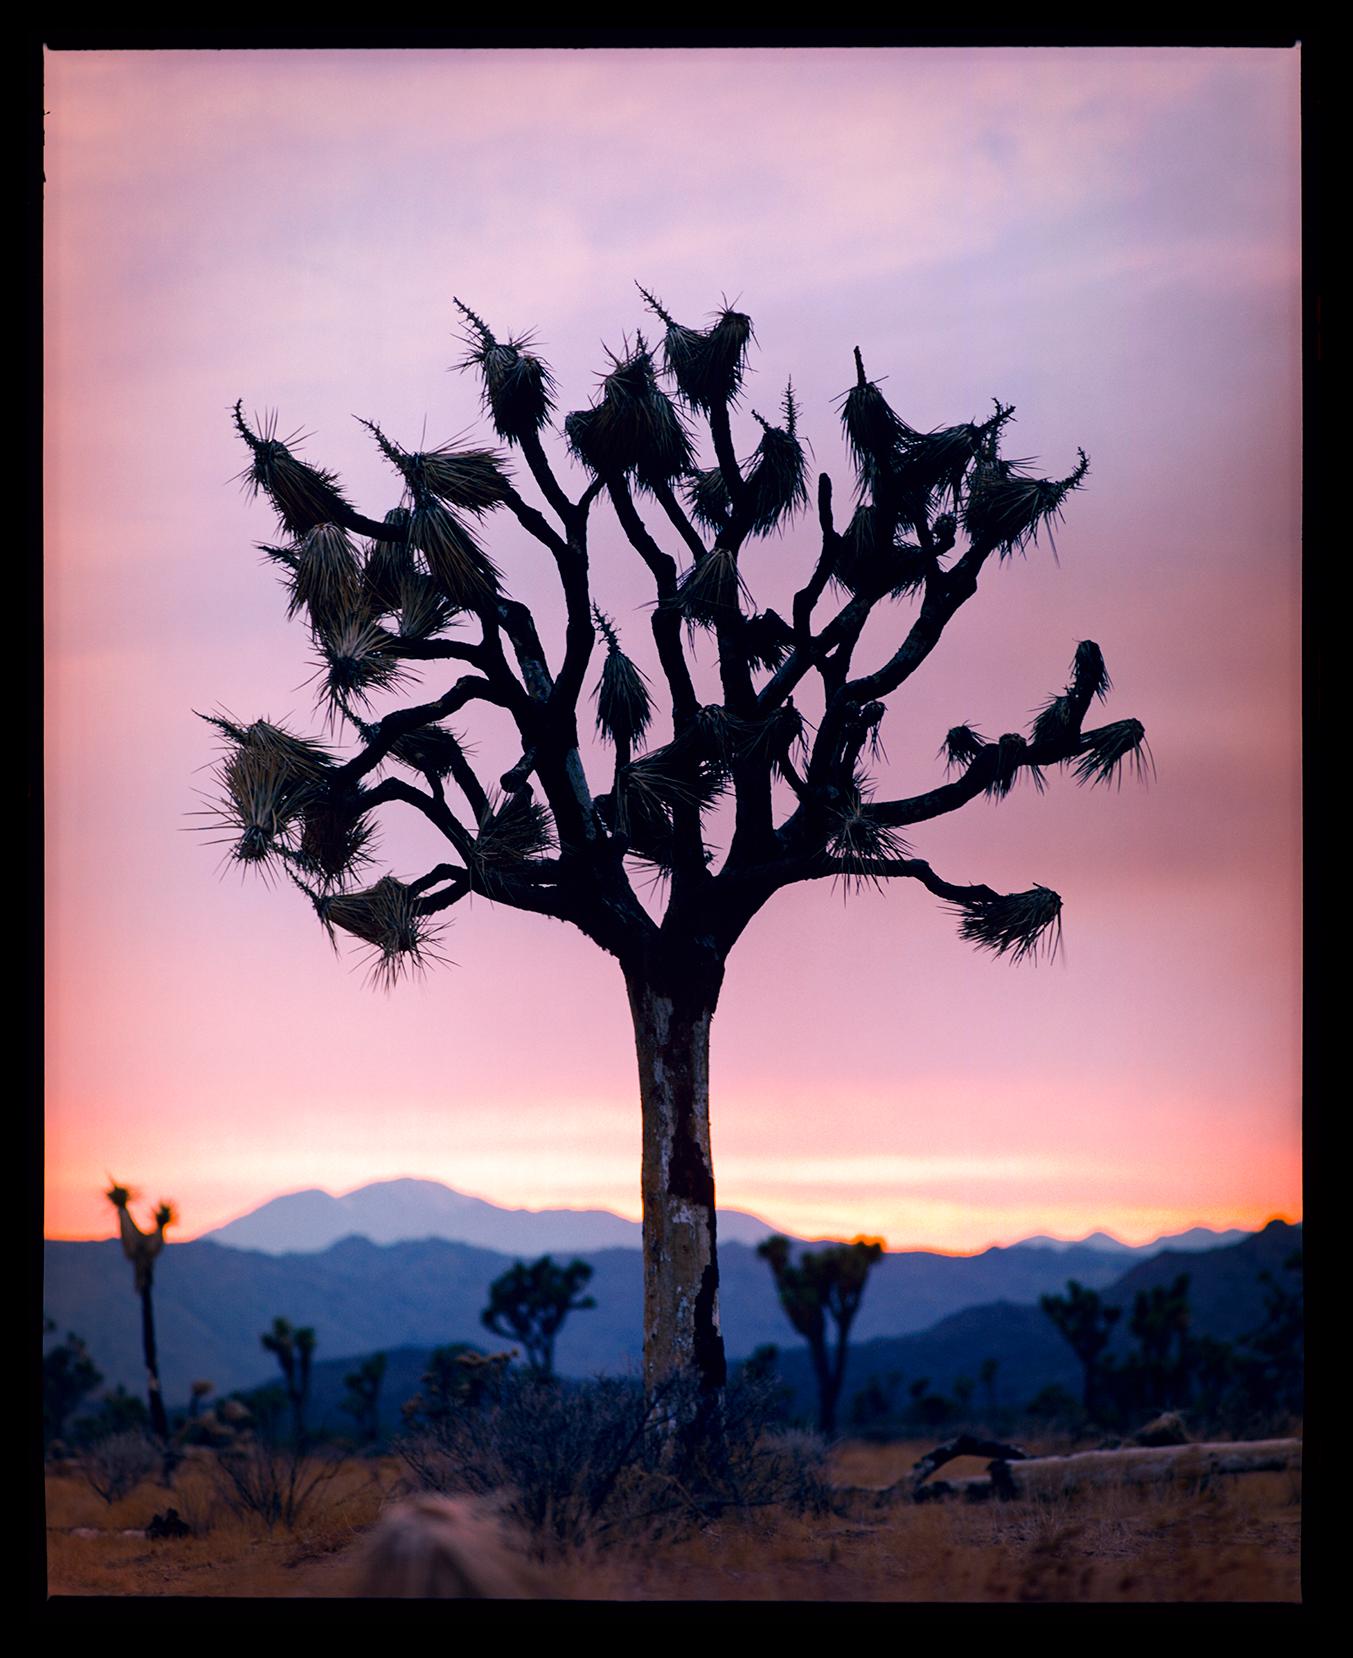 Richard Heeps Landscape Photograph - Joshua Tree, Mojave Desert, California - American landscape color photography